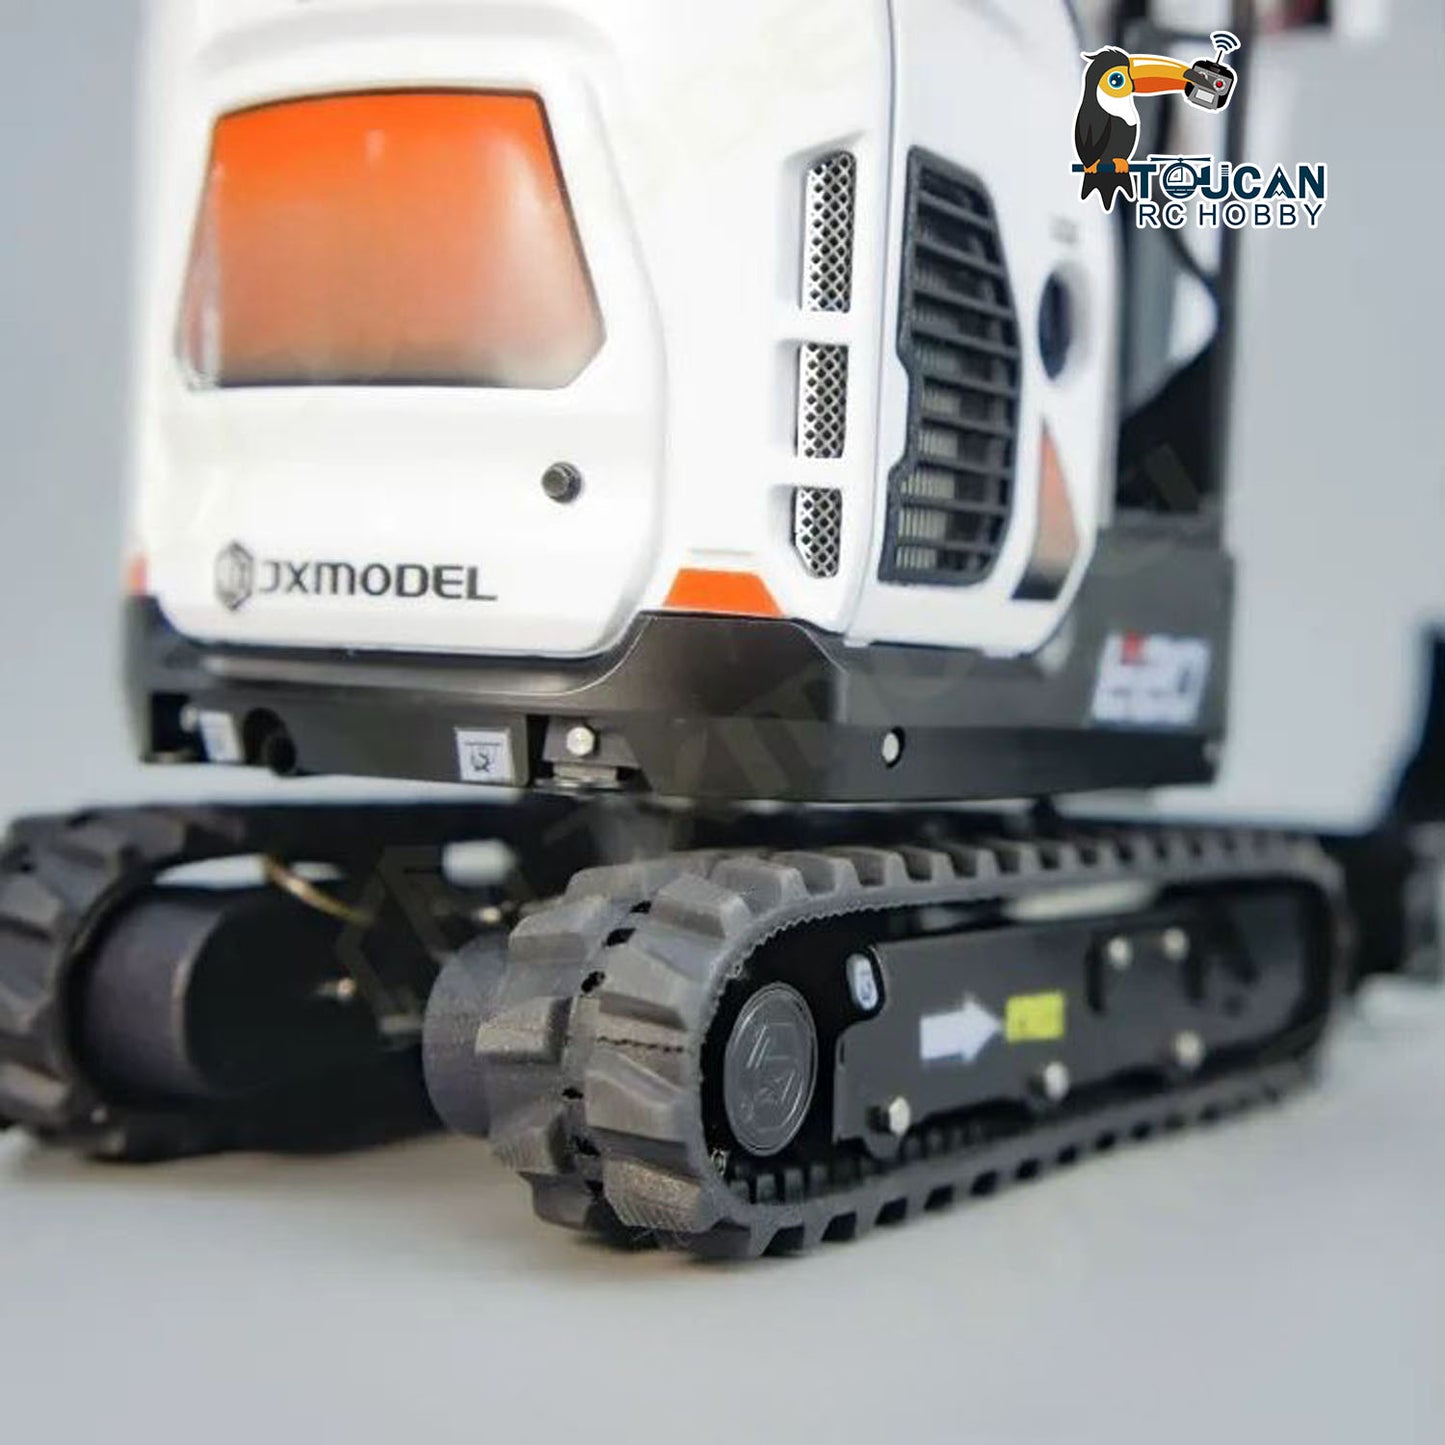 JXModel 1/14 E20 Mini RC Hydraulic Excavator Remote Control Digger Simulation Construction Vehicle Models Sounds Light